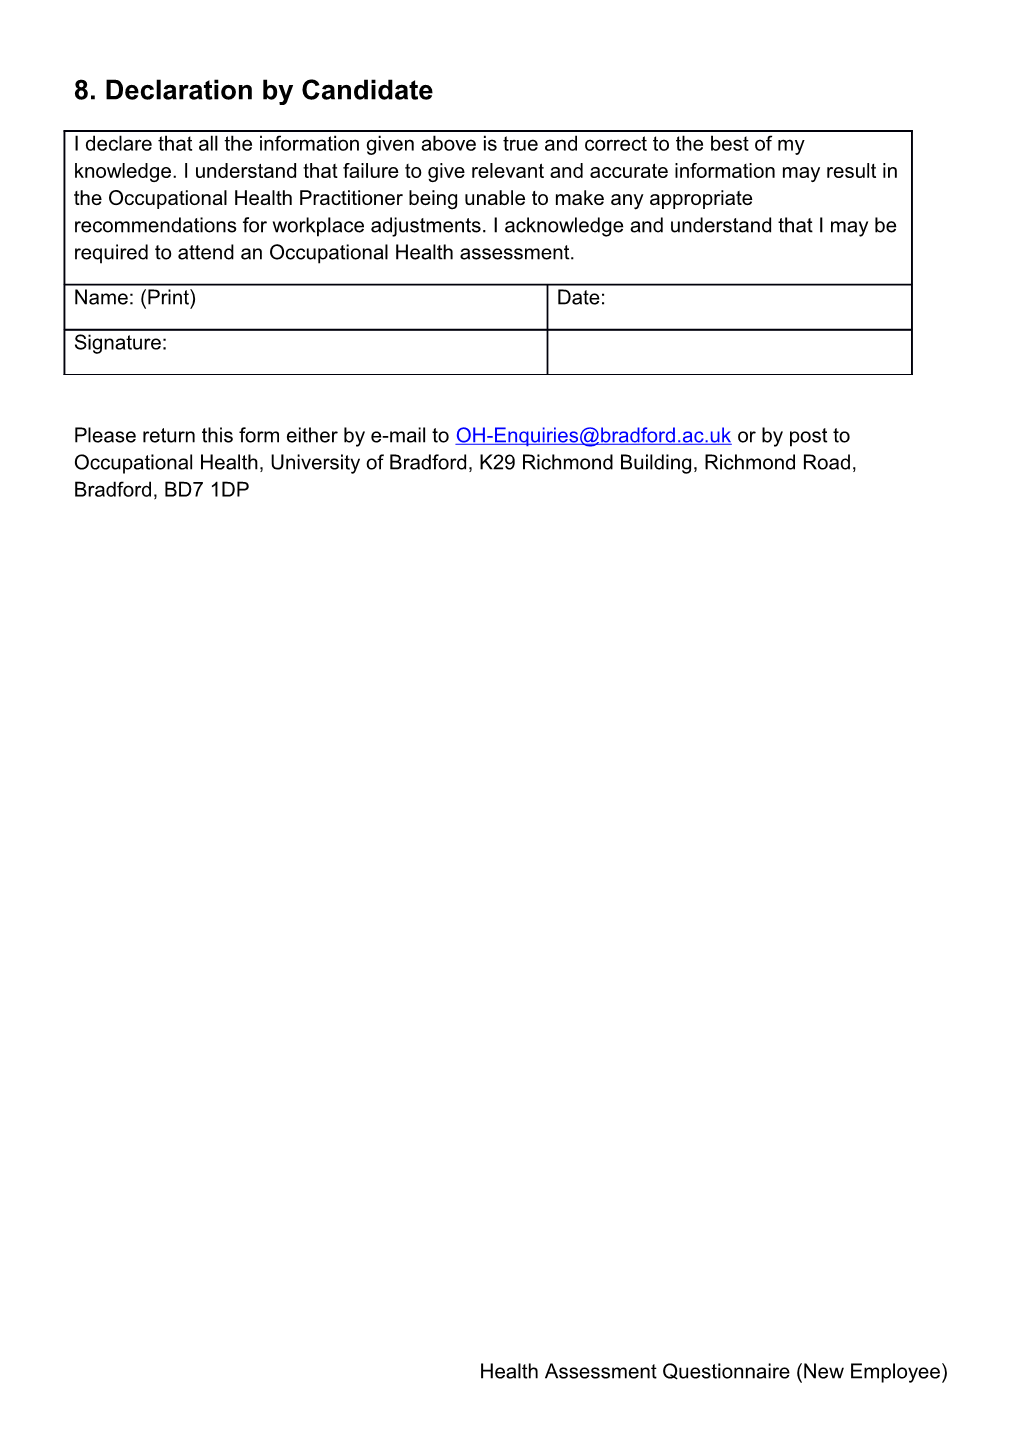 Health Assessment Questionnaire (New Employee)